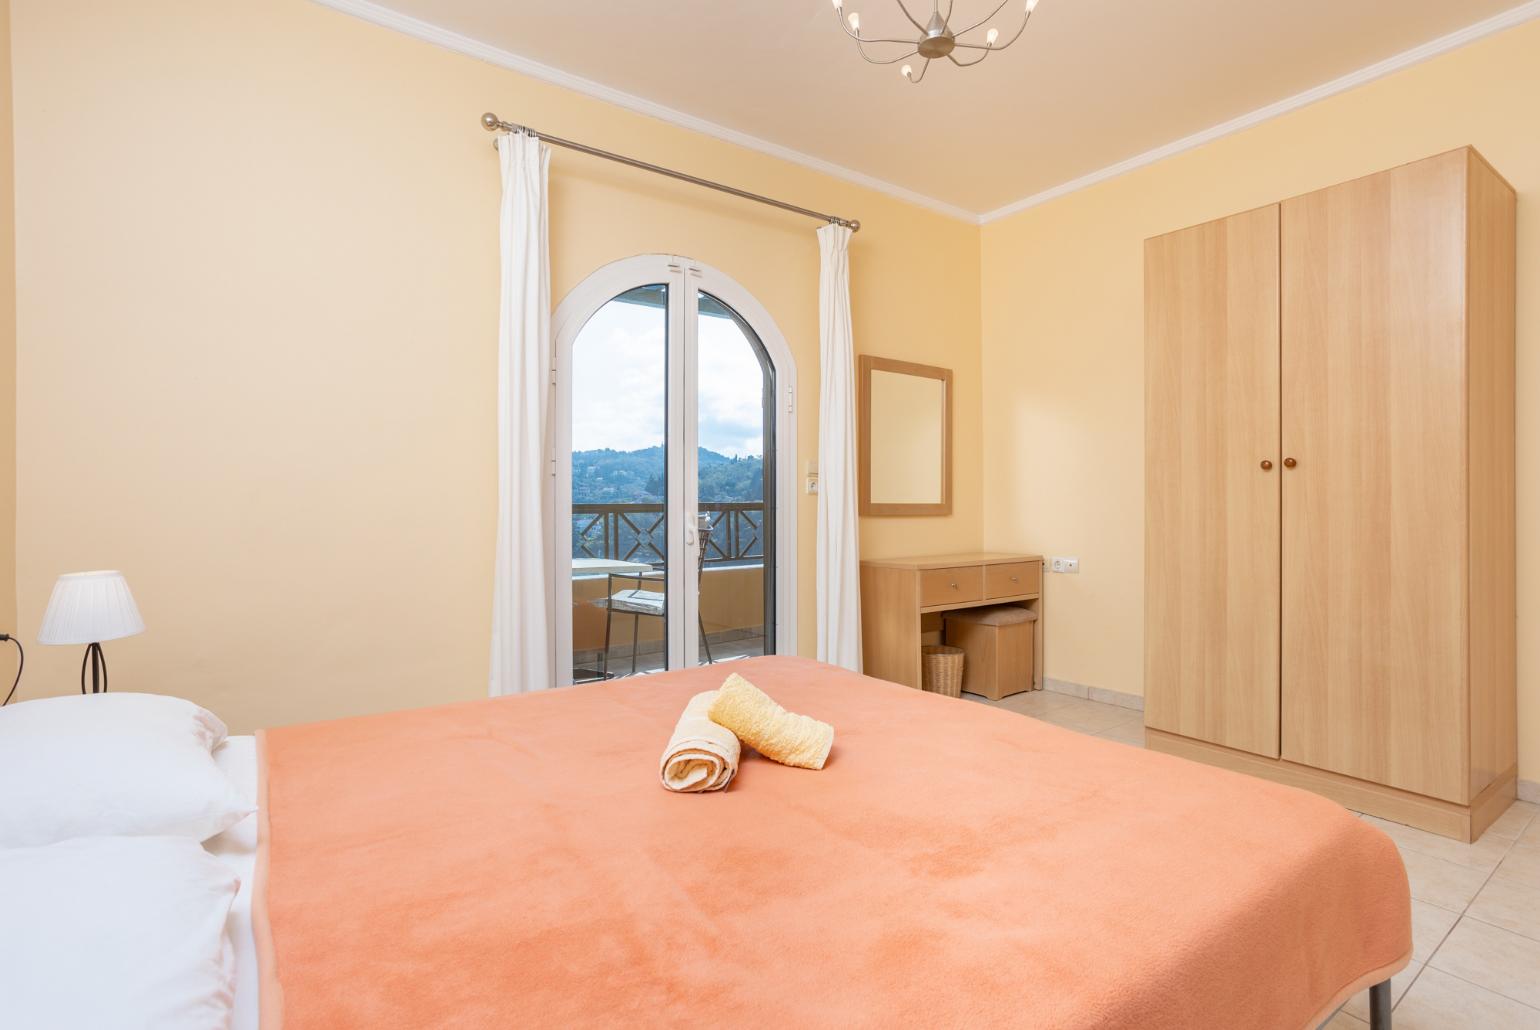 Double bedroom with en suite bathroom, A/C, sea views, and upper terrace access